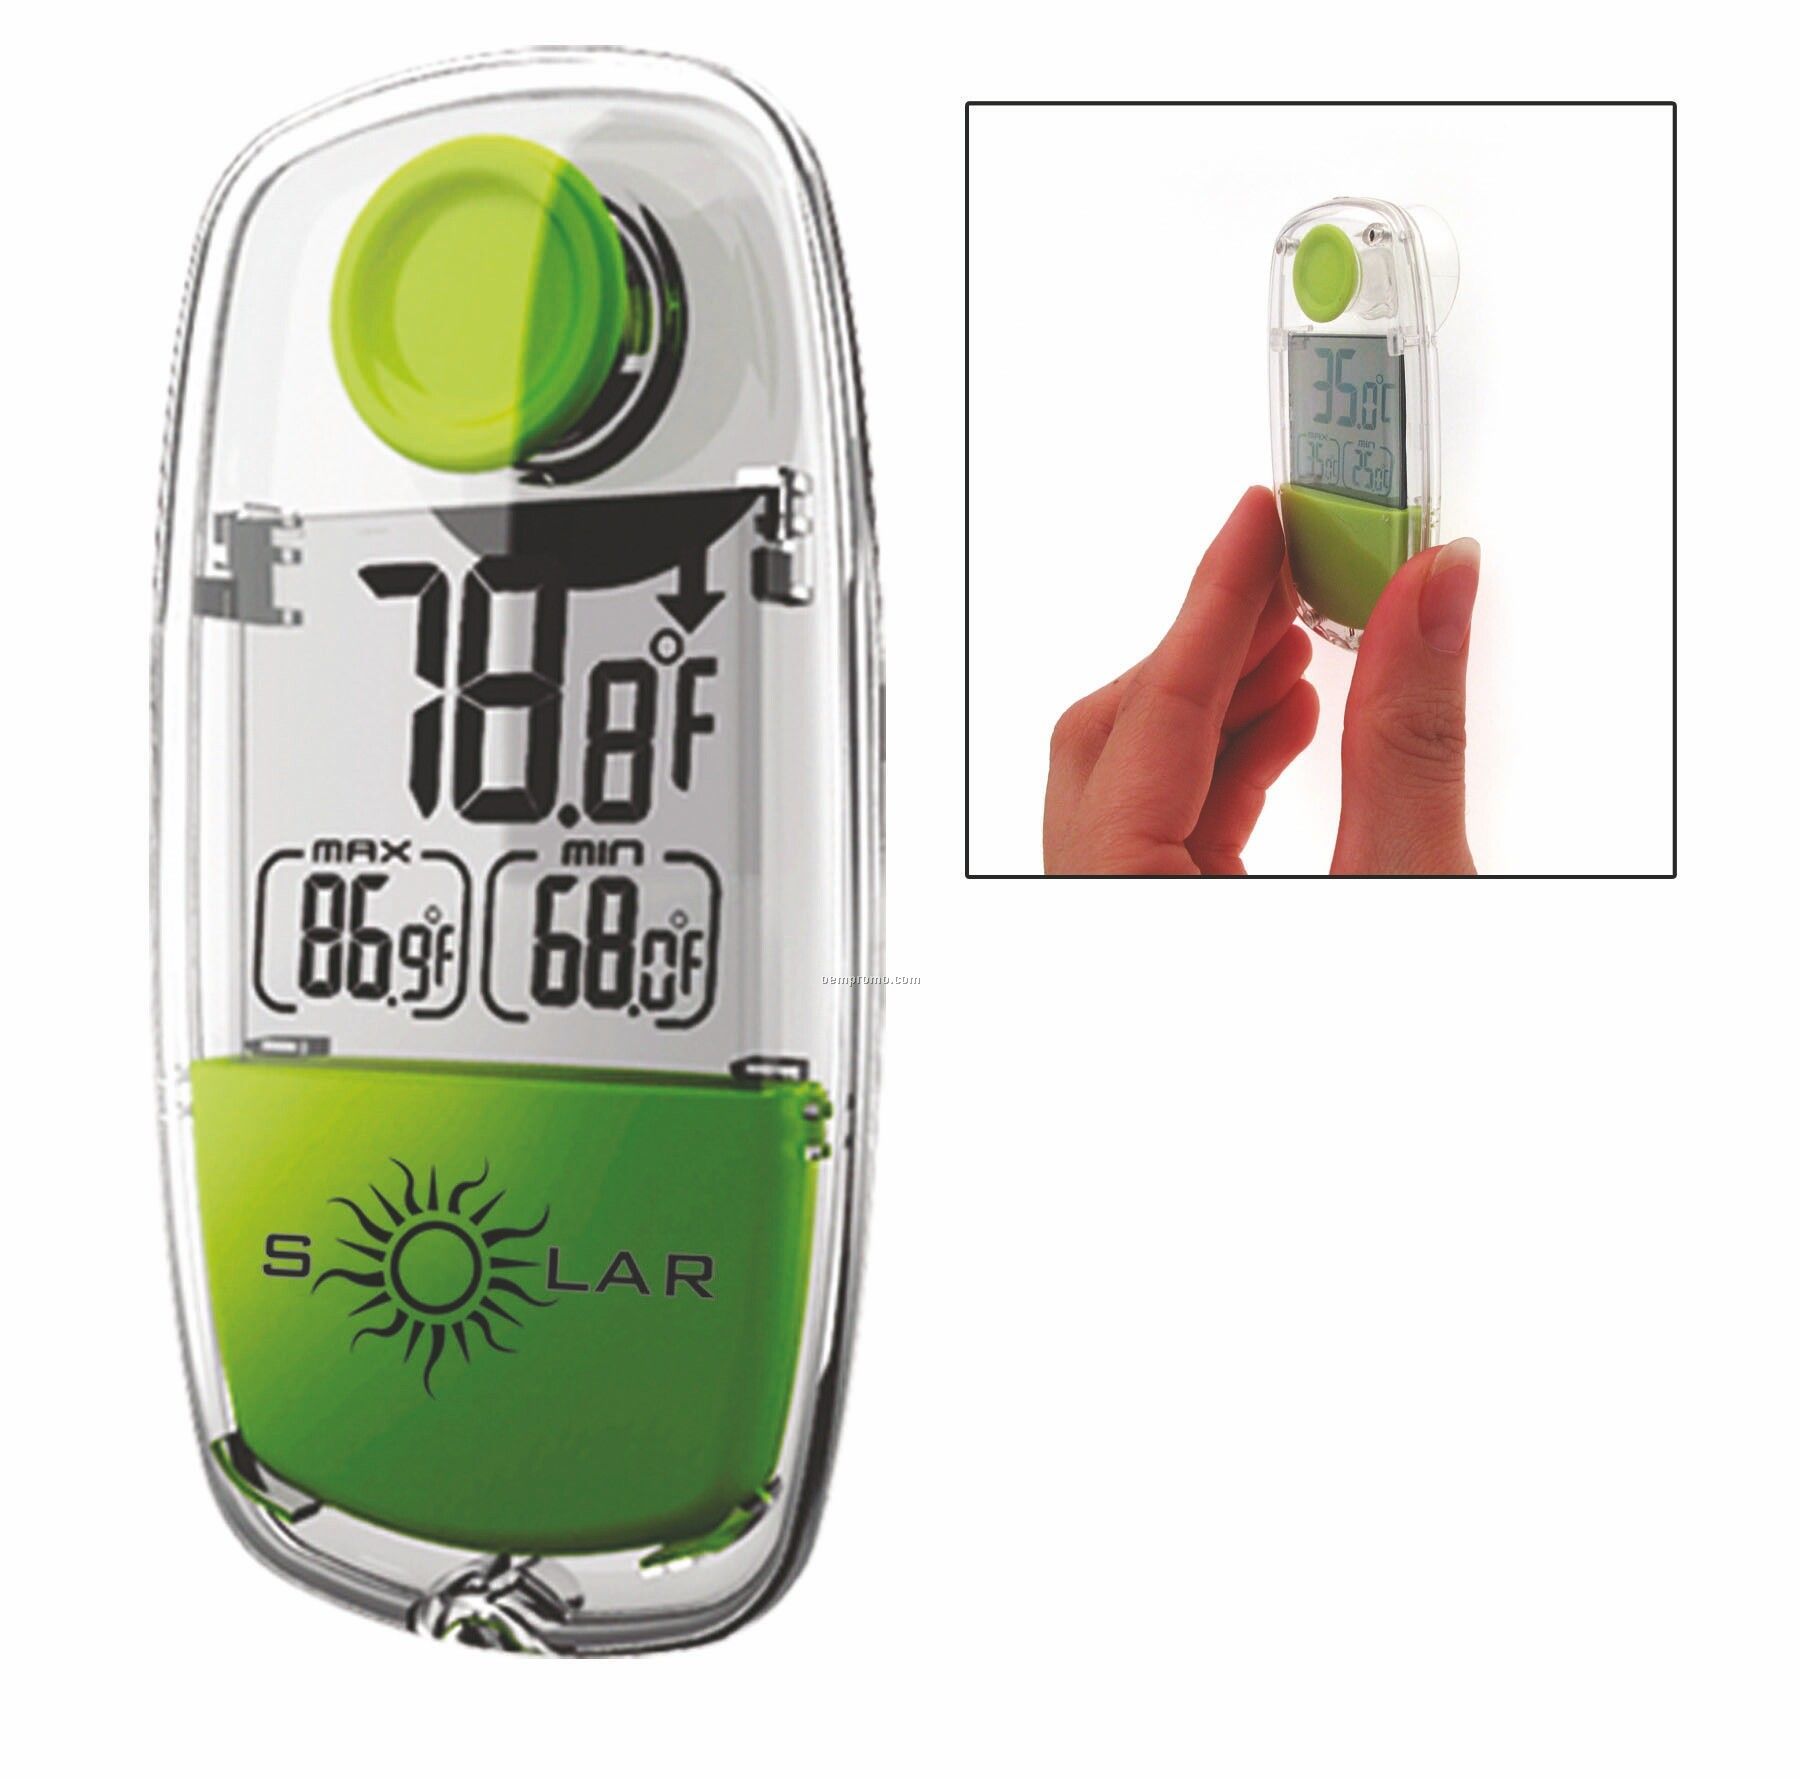 Digital Solar Thermometer